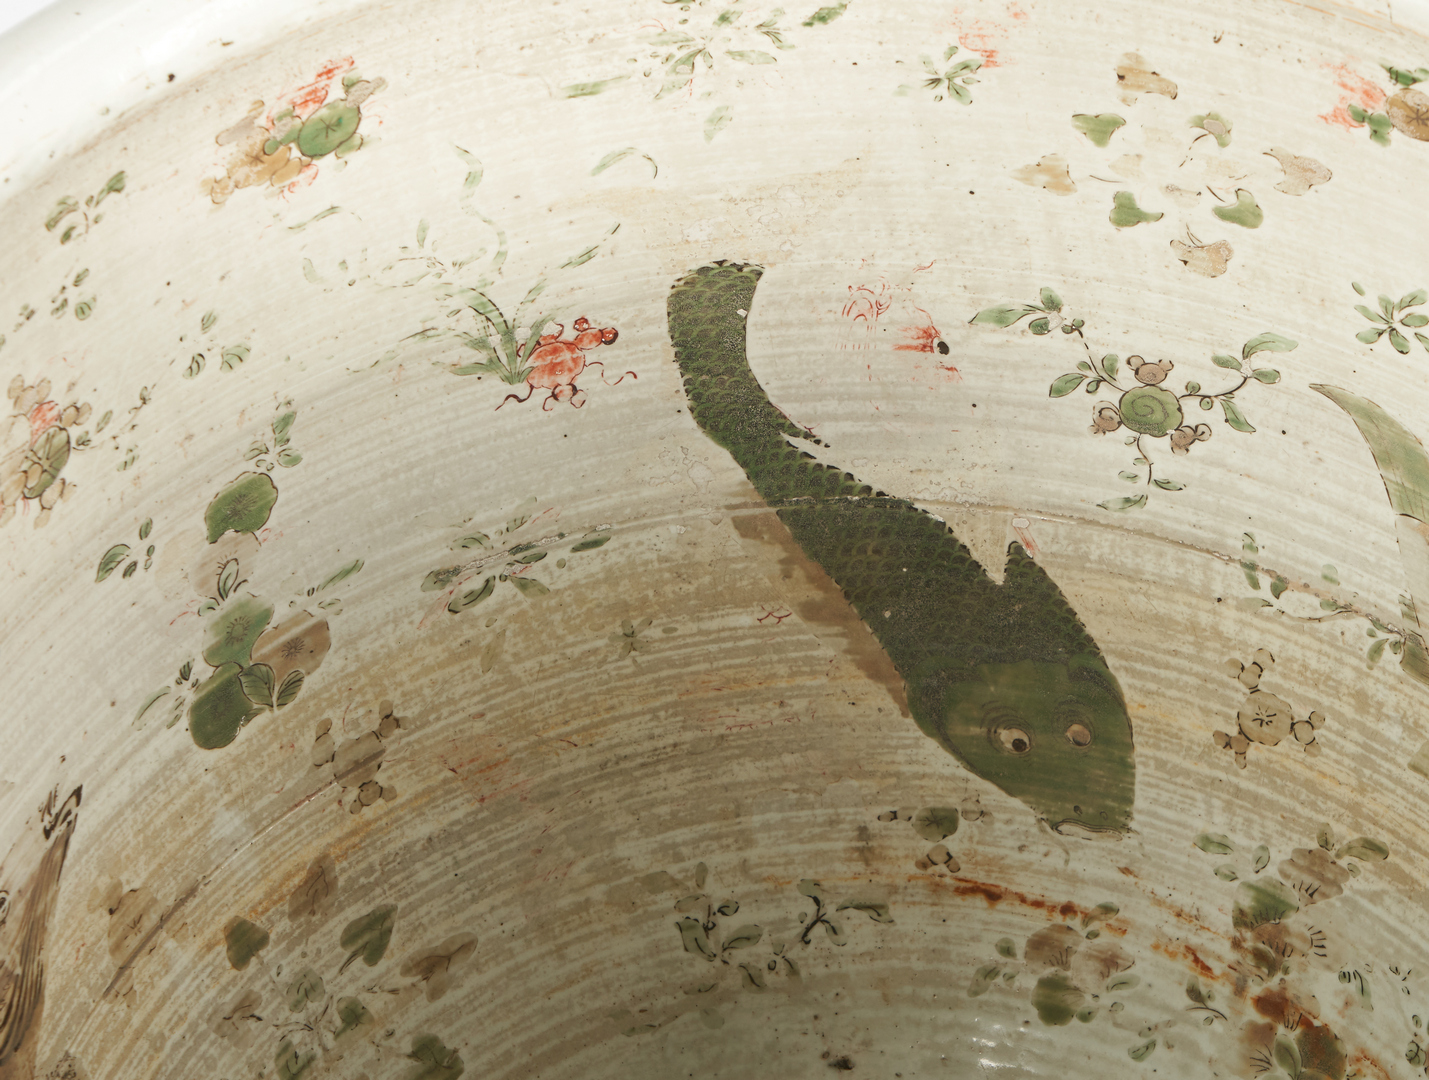 Lot 29: Chinese Famille Verte Porcelain Fish Bowl